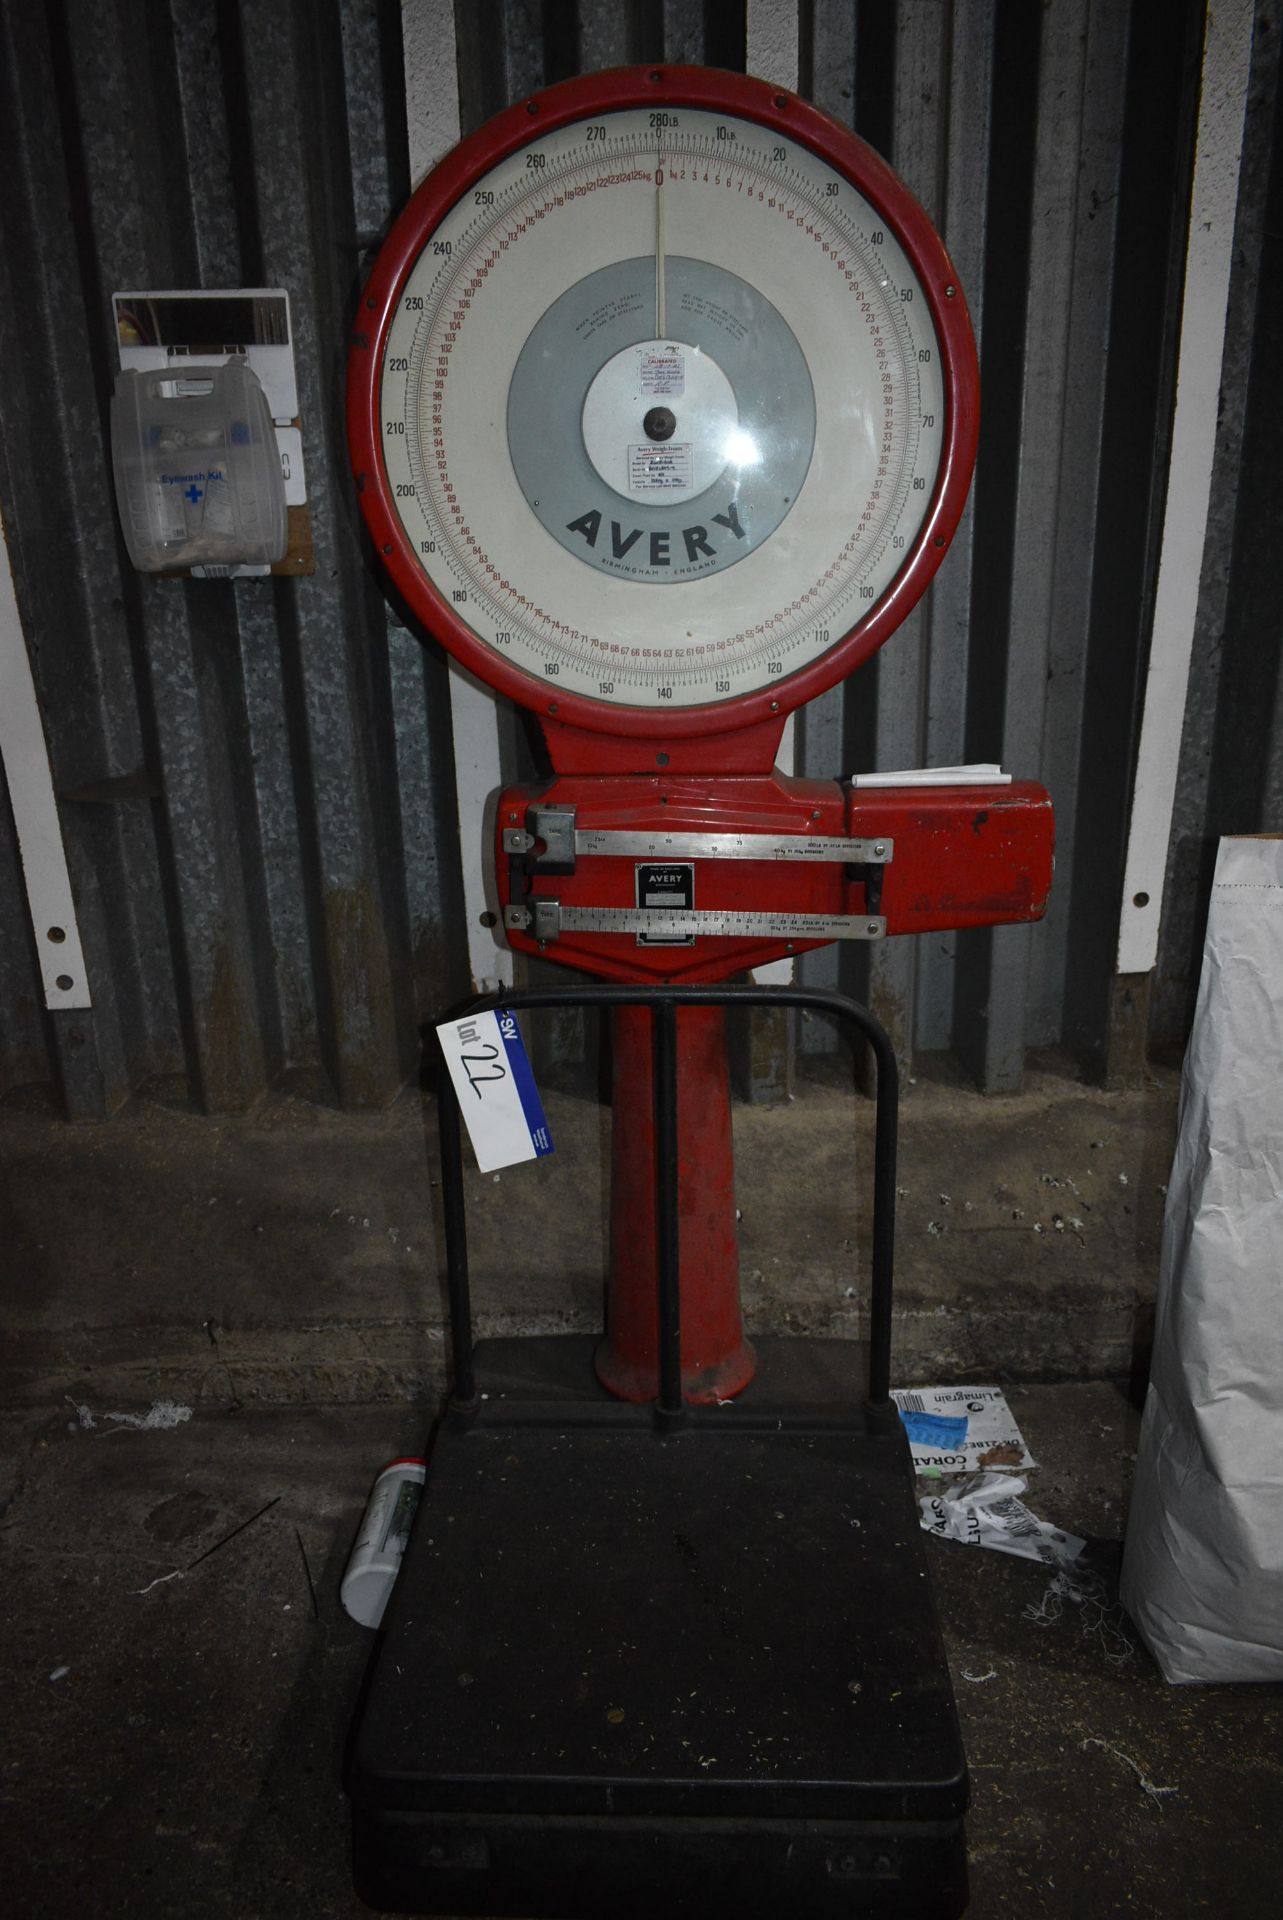 Avery 3205CLE 175kg Dial Indicating Portable Platform Weighing Machine, serial no. B651309-9 (free